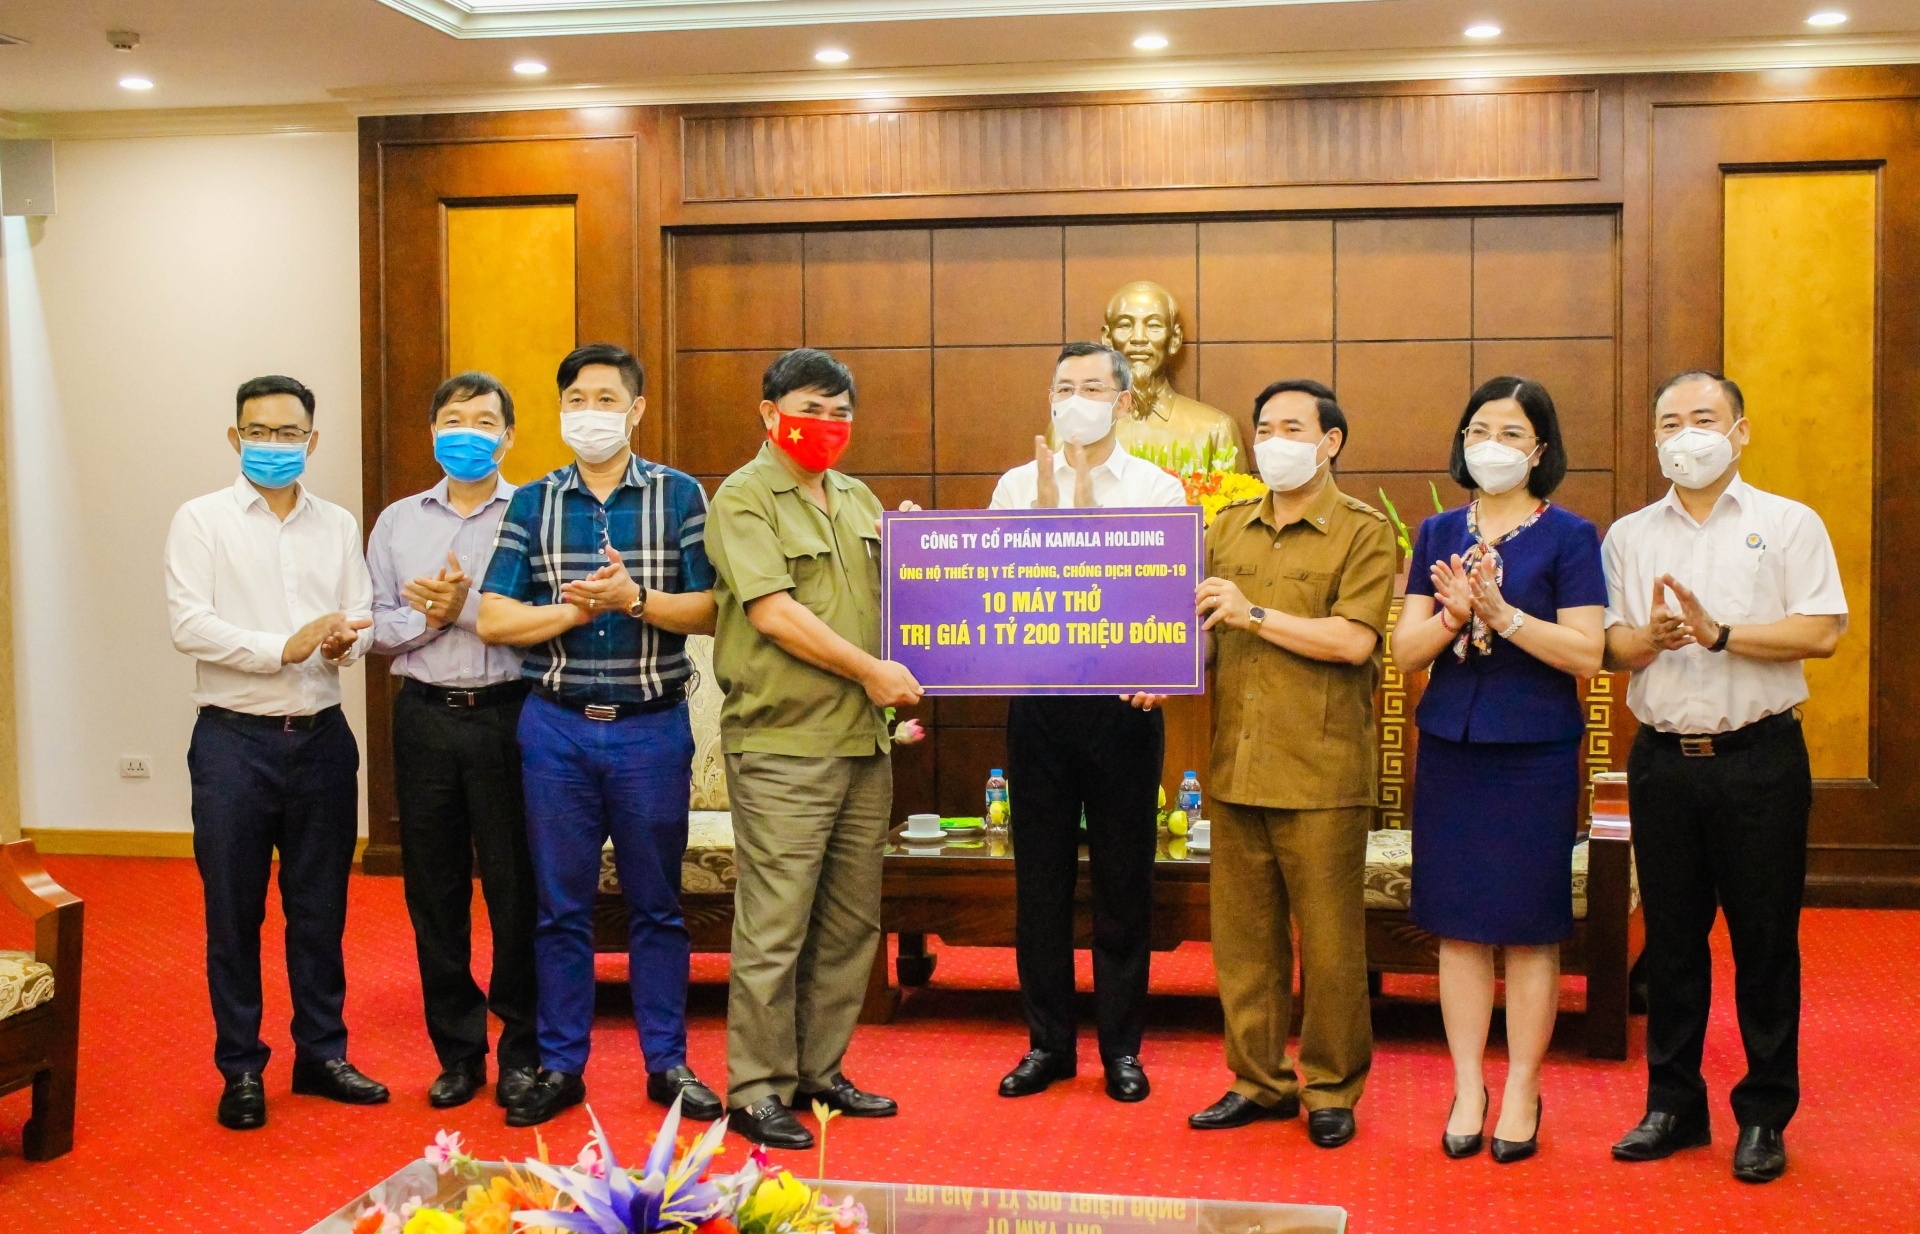 Kamala Holding donates 10 ventilators to support Hoa Binh province in tackling pandemic